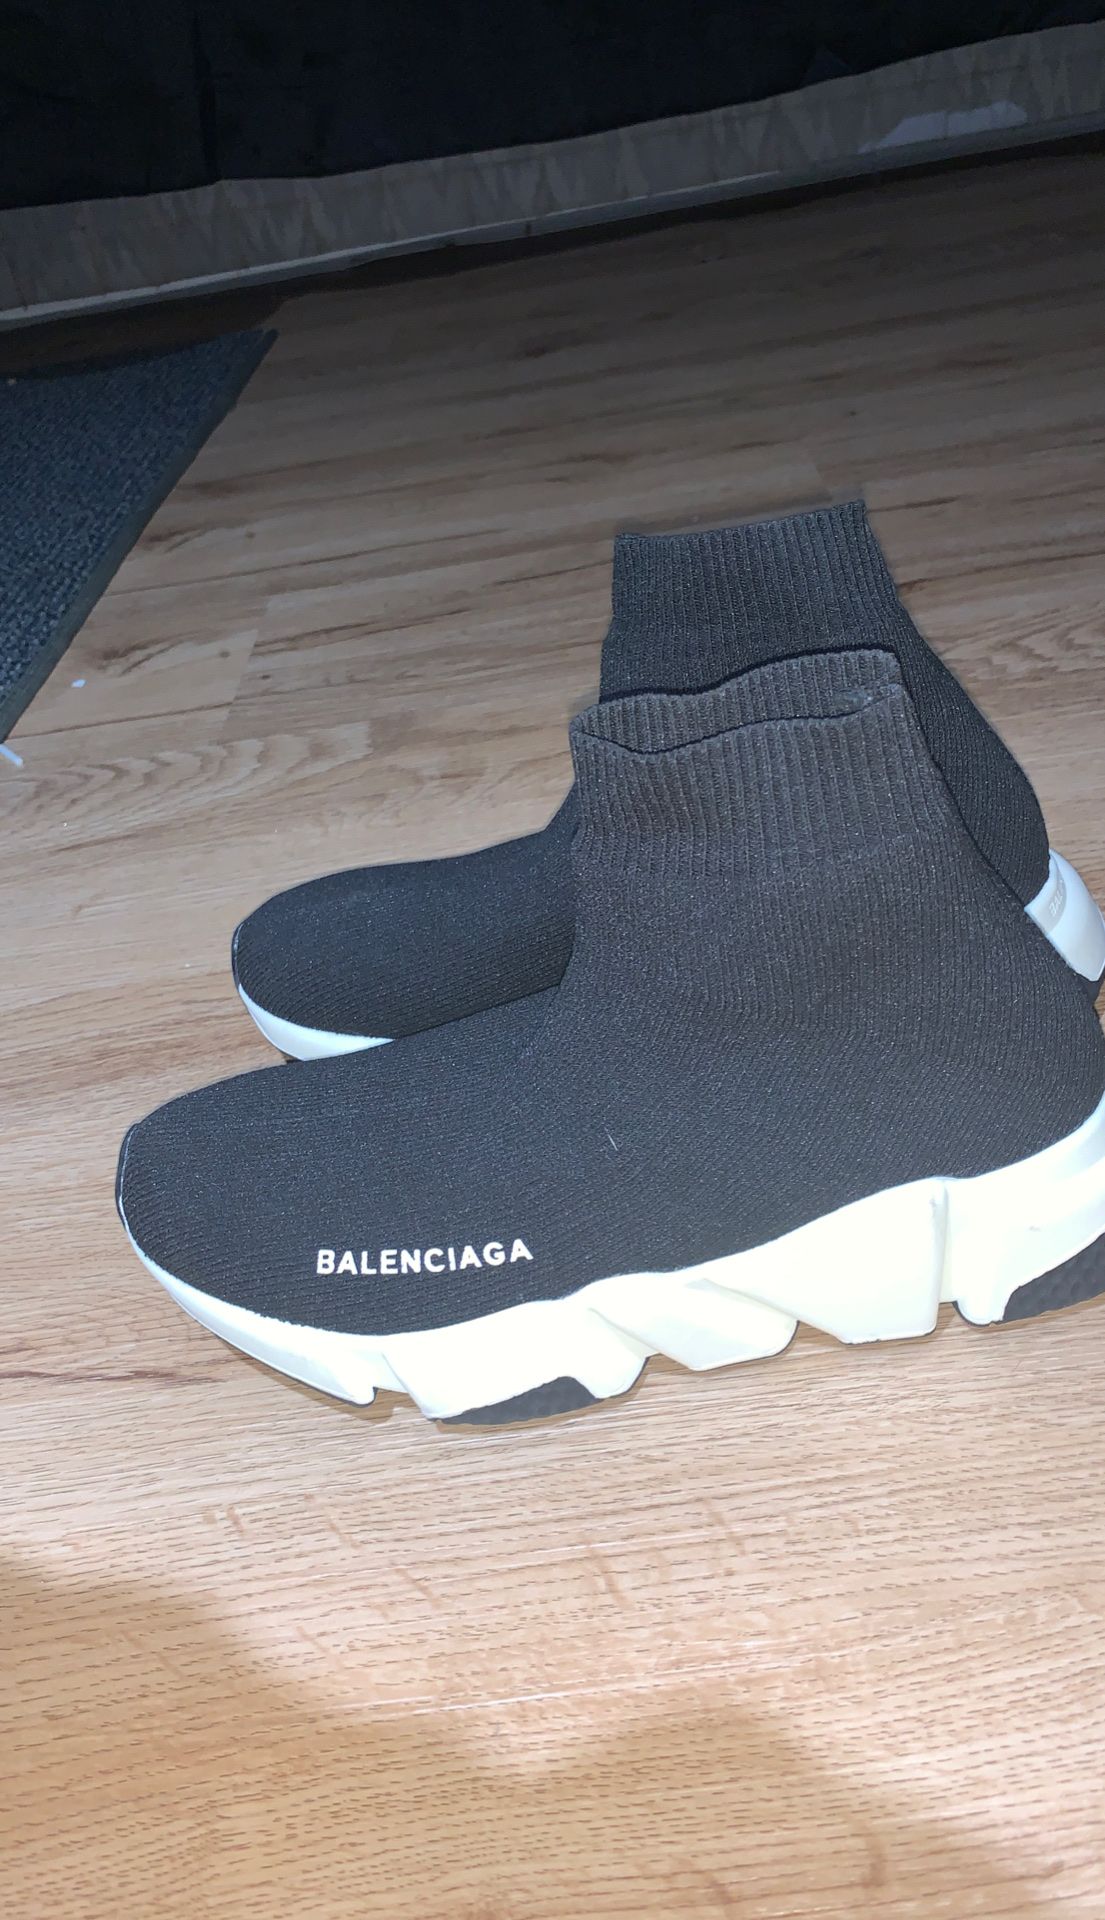 Balenciaga runners size 5.5